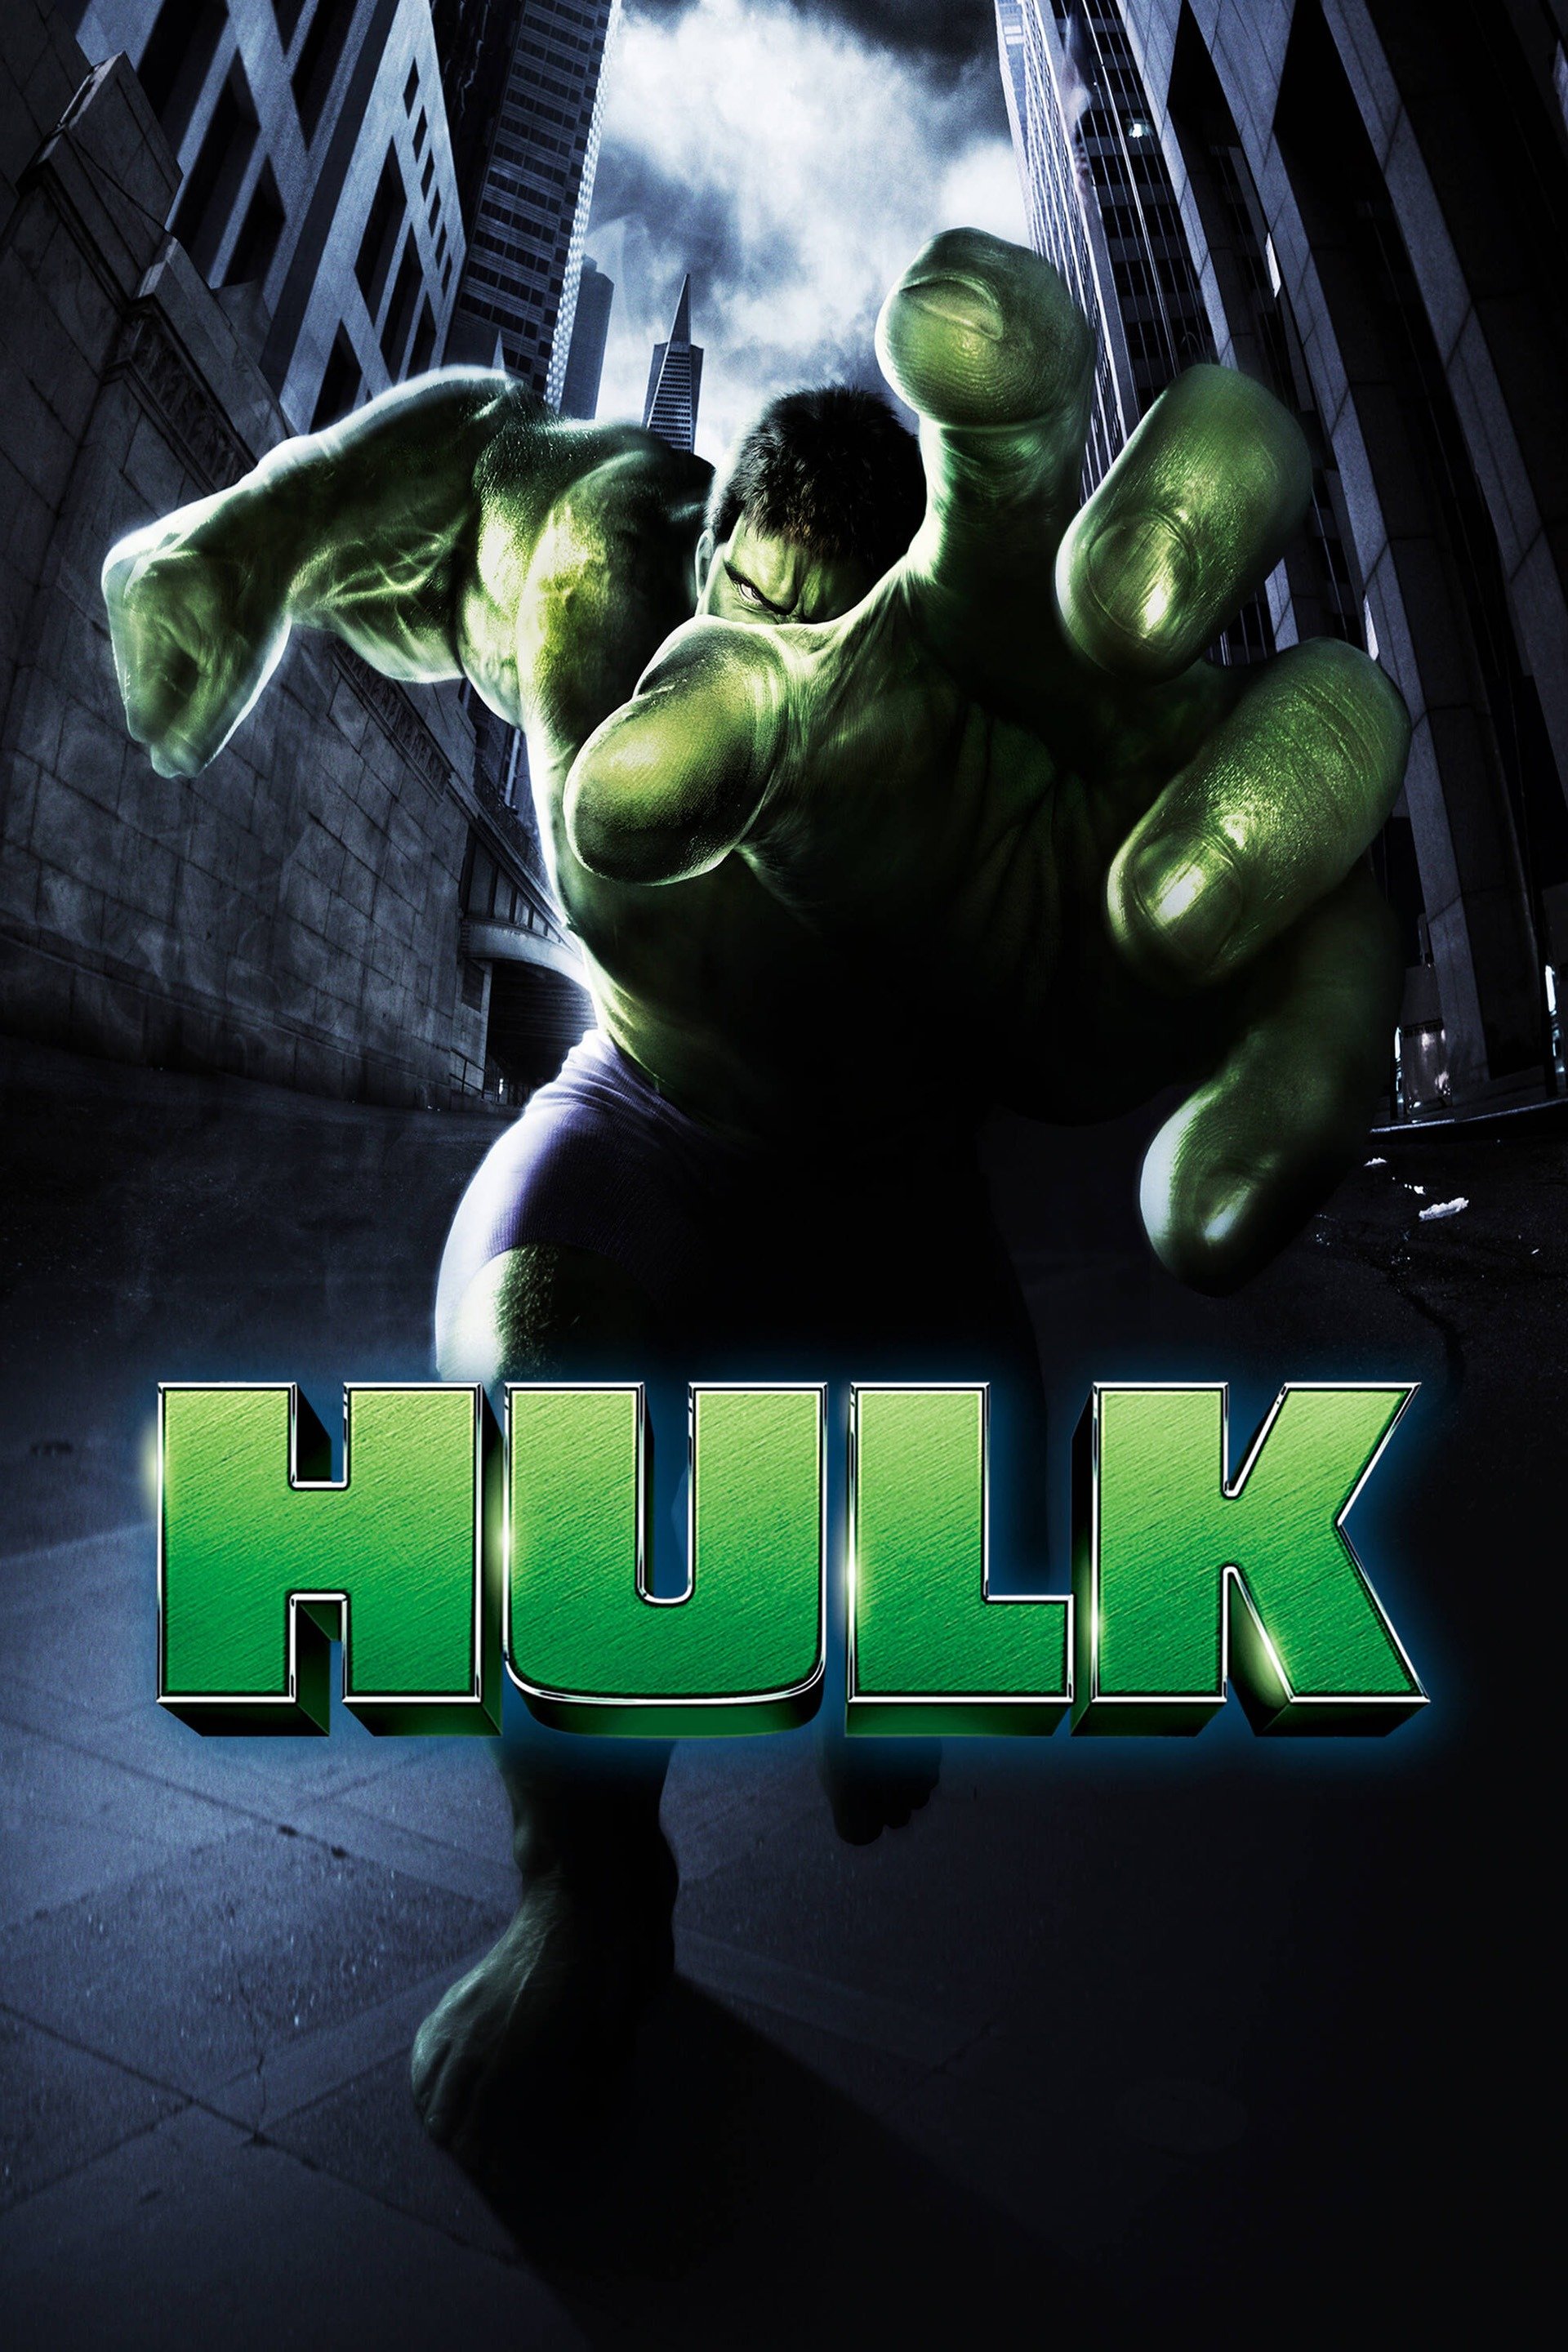 bad incredible hulk costume